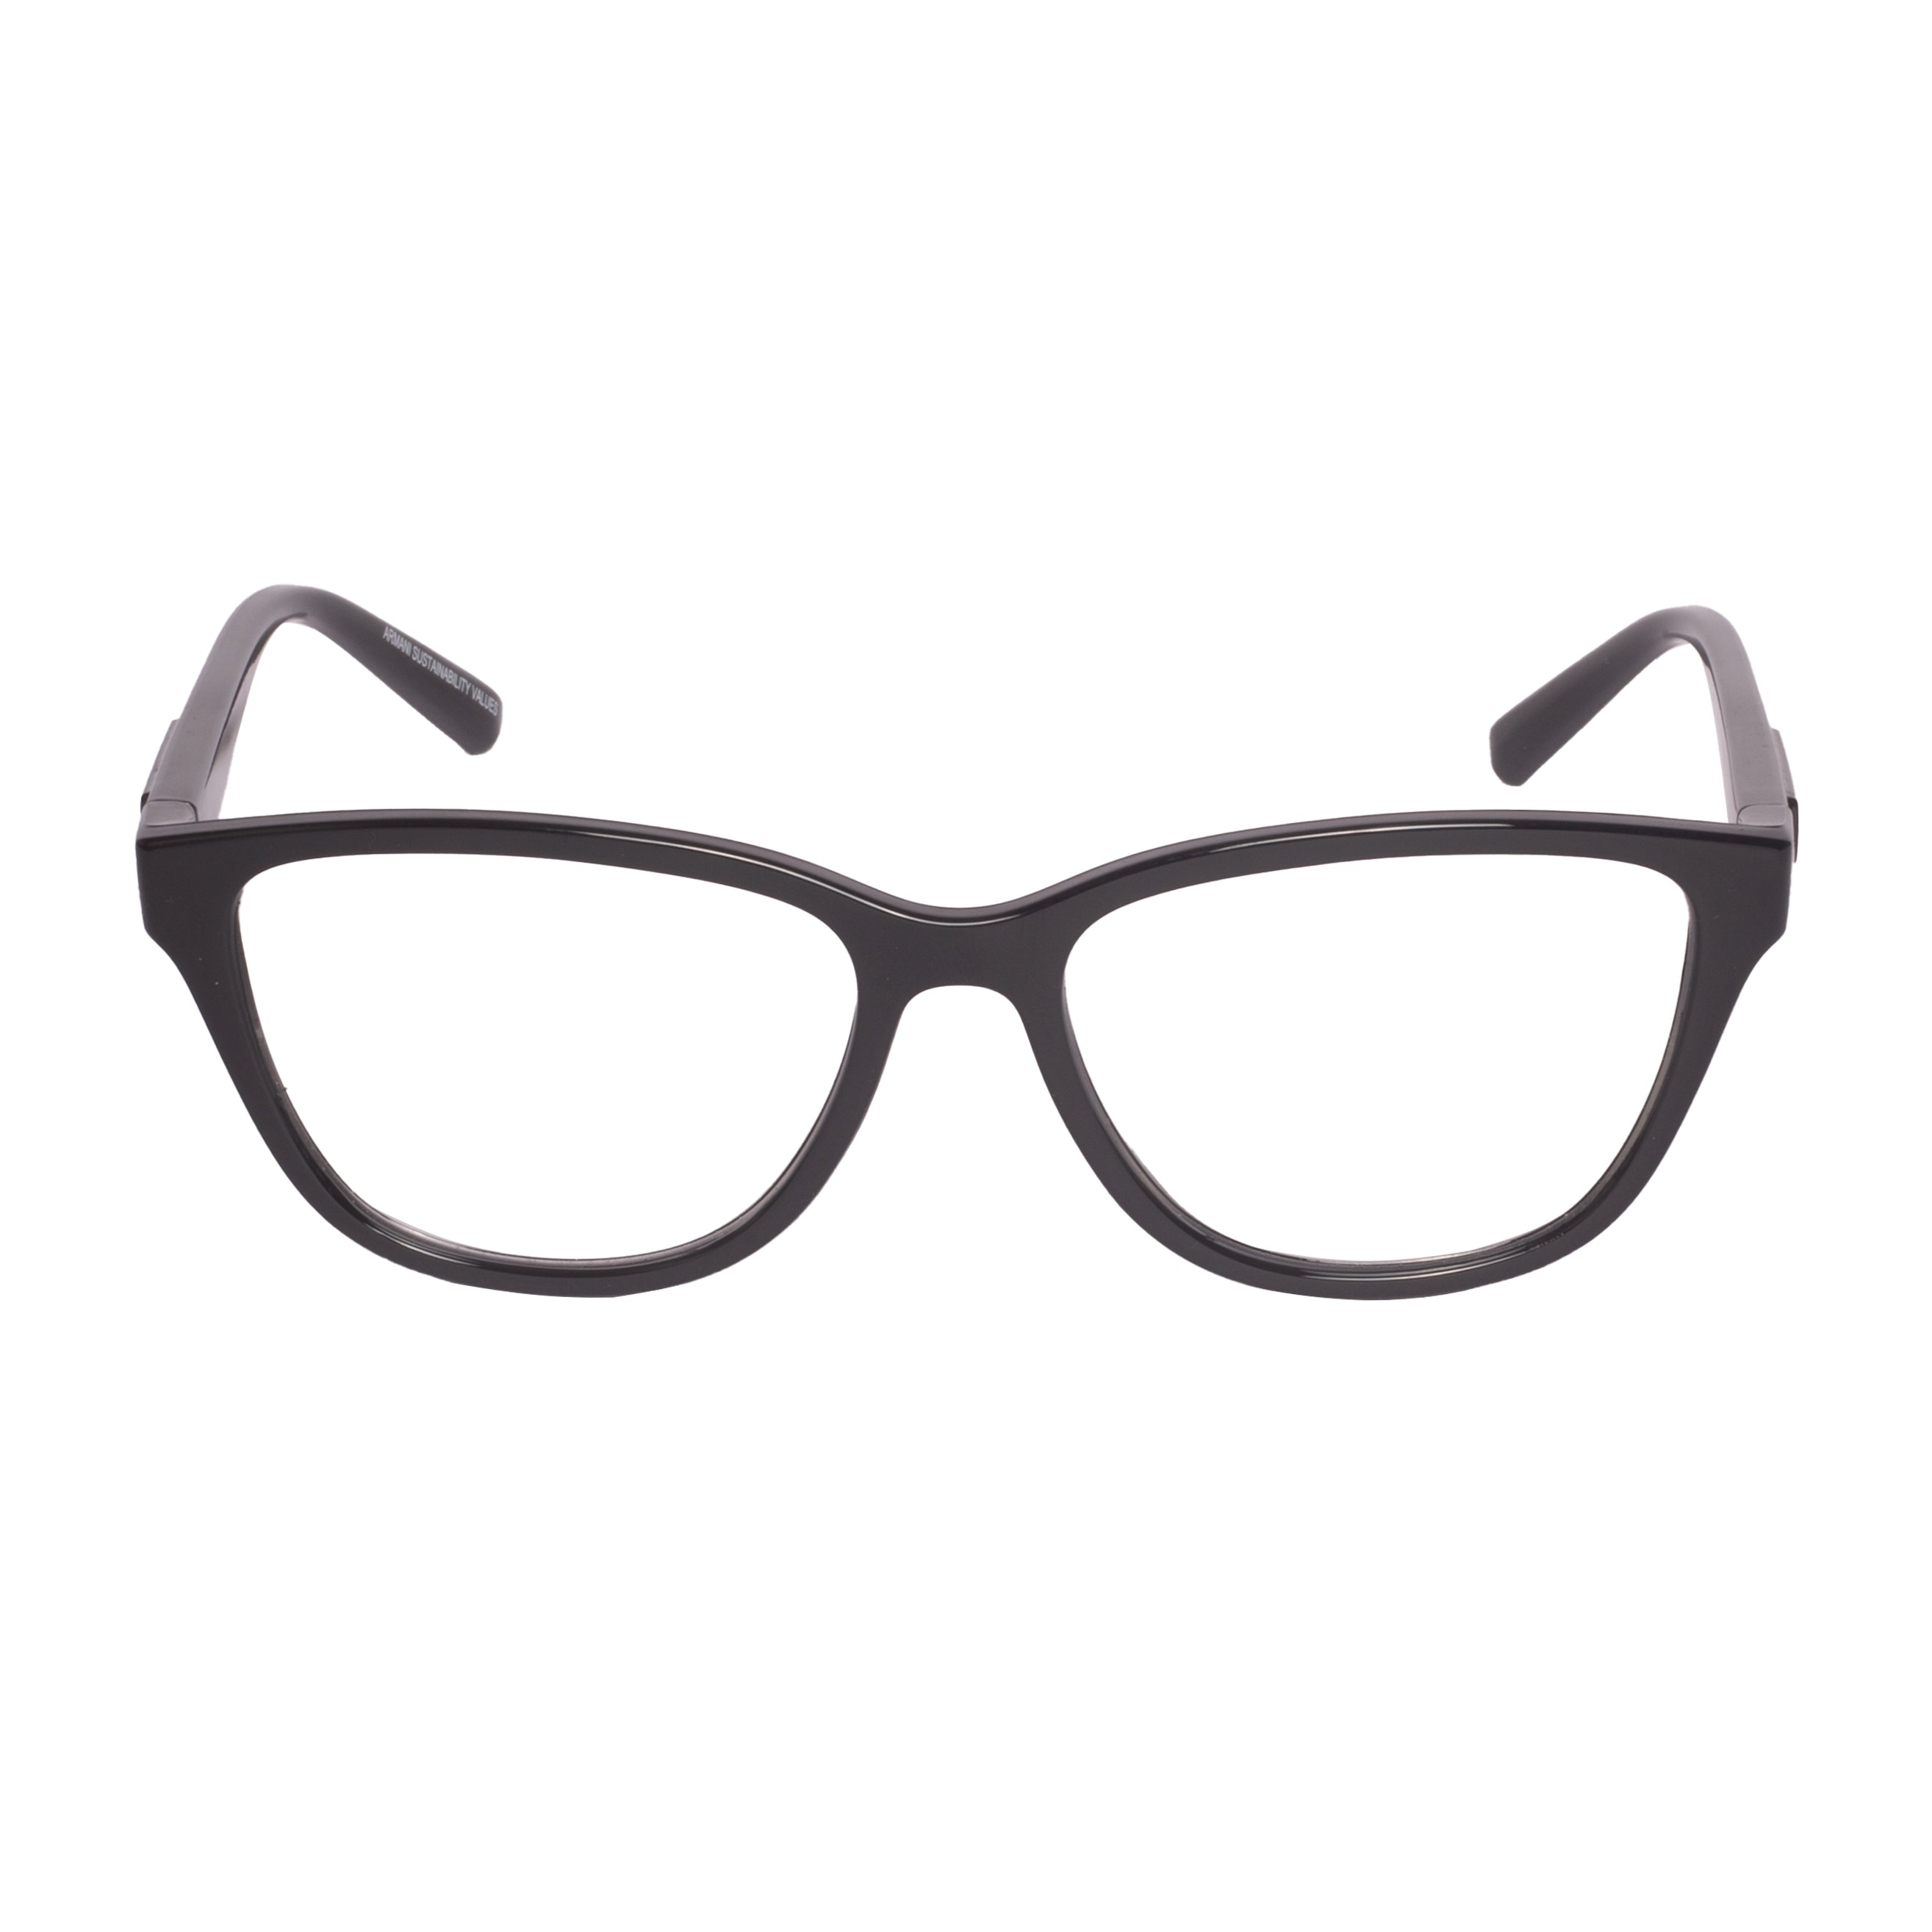 Armani Exchange-AX 3111--8158 Eyeglasses - Premium Eyeglasses from Armani Exchange - Just Rs. 8290! Shop now at Laxmi Opticians